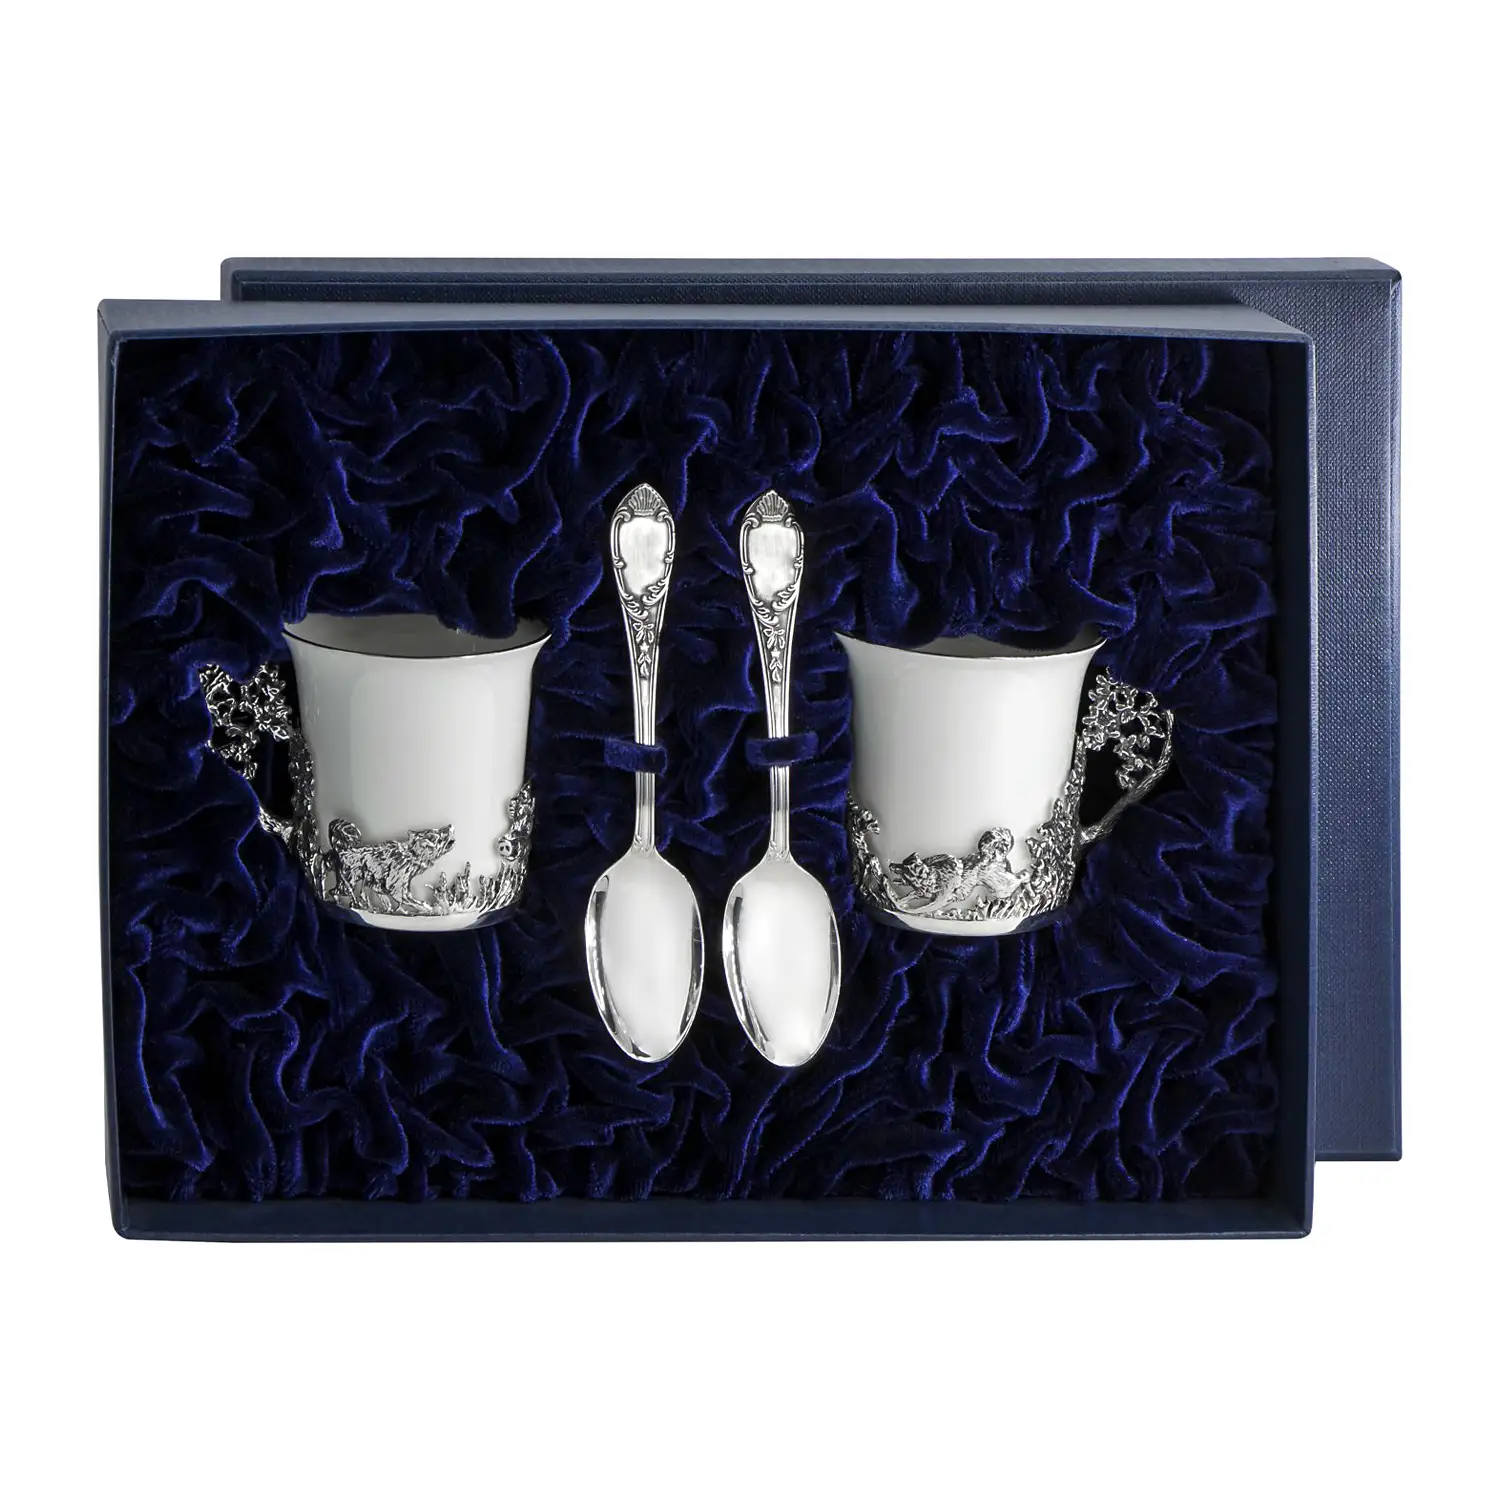 Набор кофейных чашек Кабан: ложка, чашка (Серебро 925) набор кофейных чашек богема блюдце чашка серебро 925